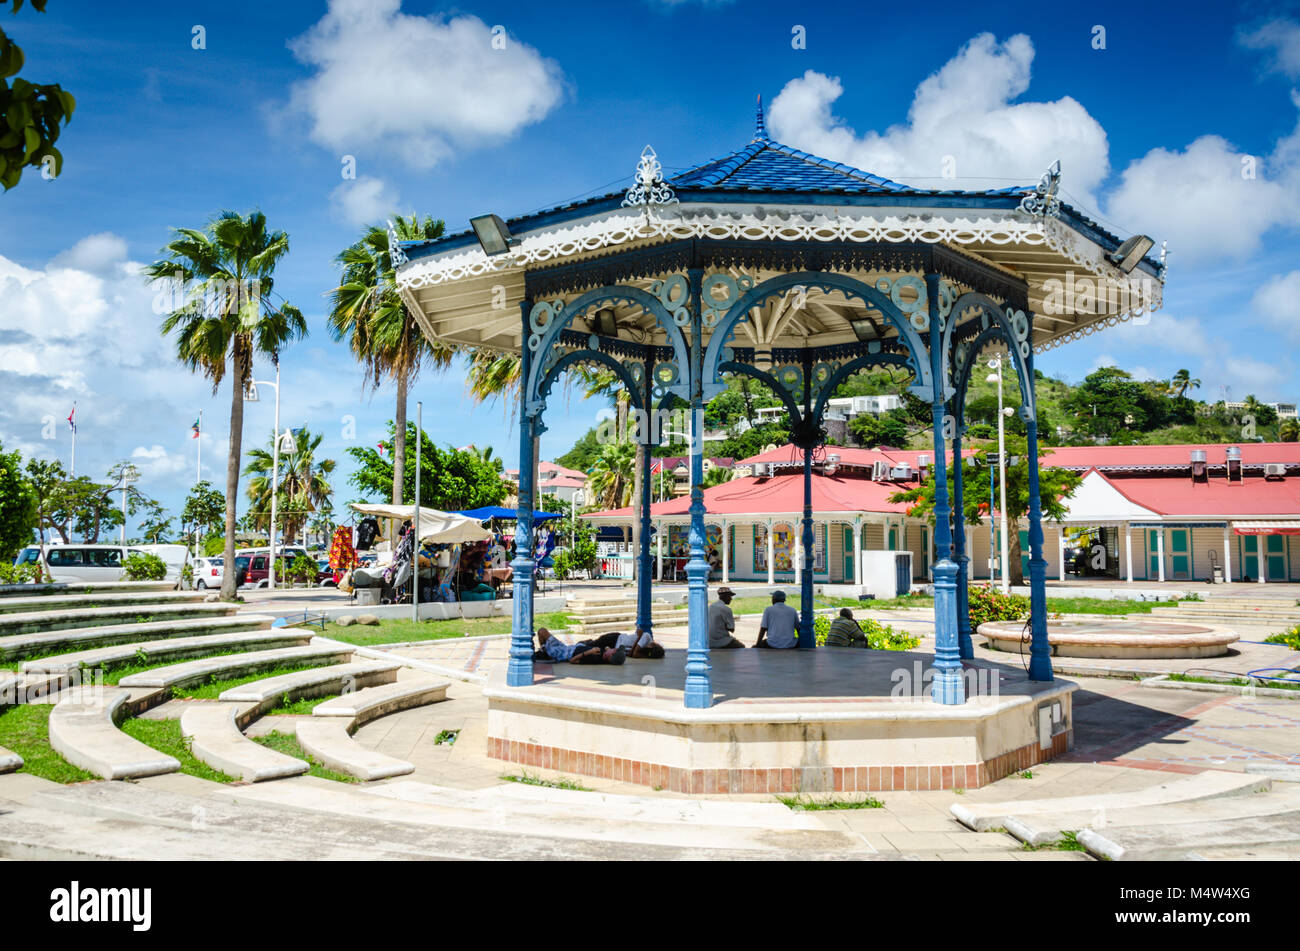 Historische Pavillon, geschmückt mit Lebkuchen detail, bietet willkommenen Schatten an der geöffneten Luft Marigot Markt St. Martin/St. Maarten. Stockfoto